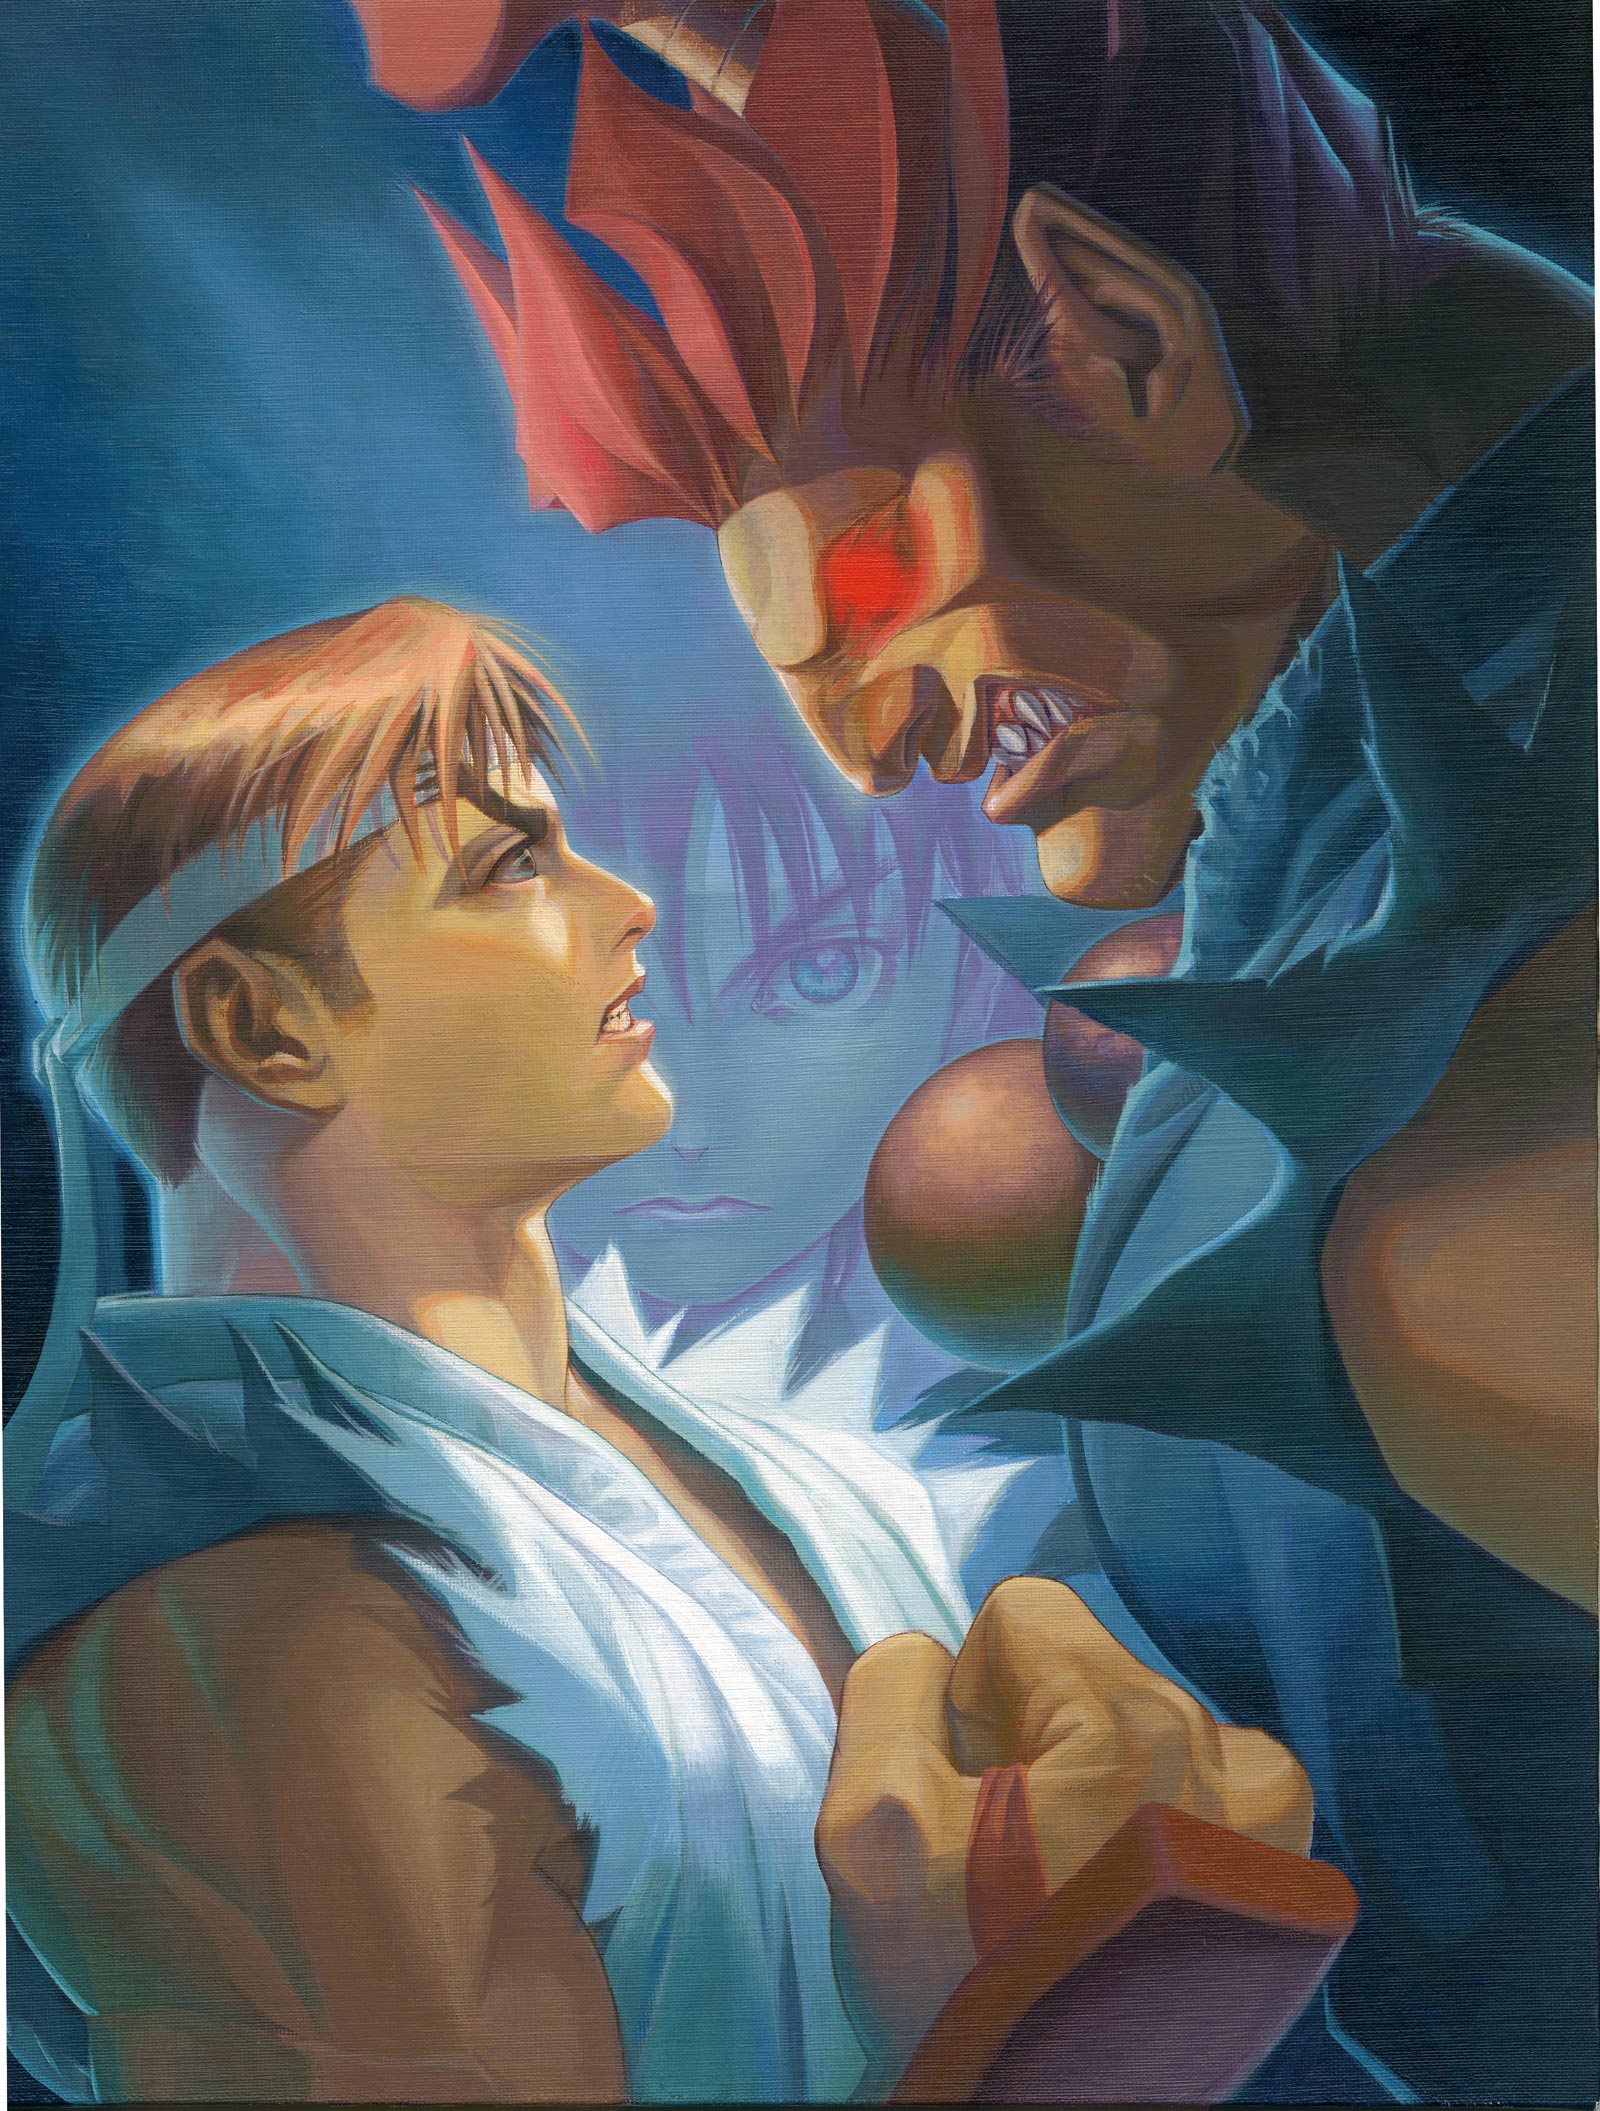 SF Alpha 3 Characters Artwork - Street Fighter Series Art Gallery